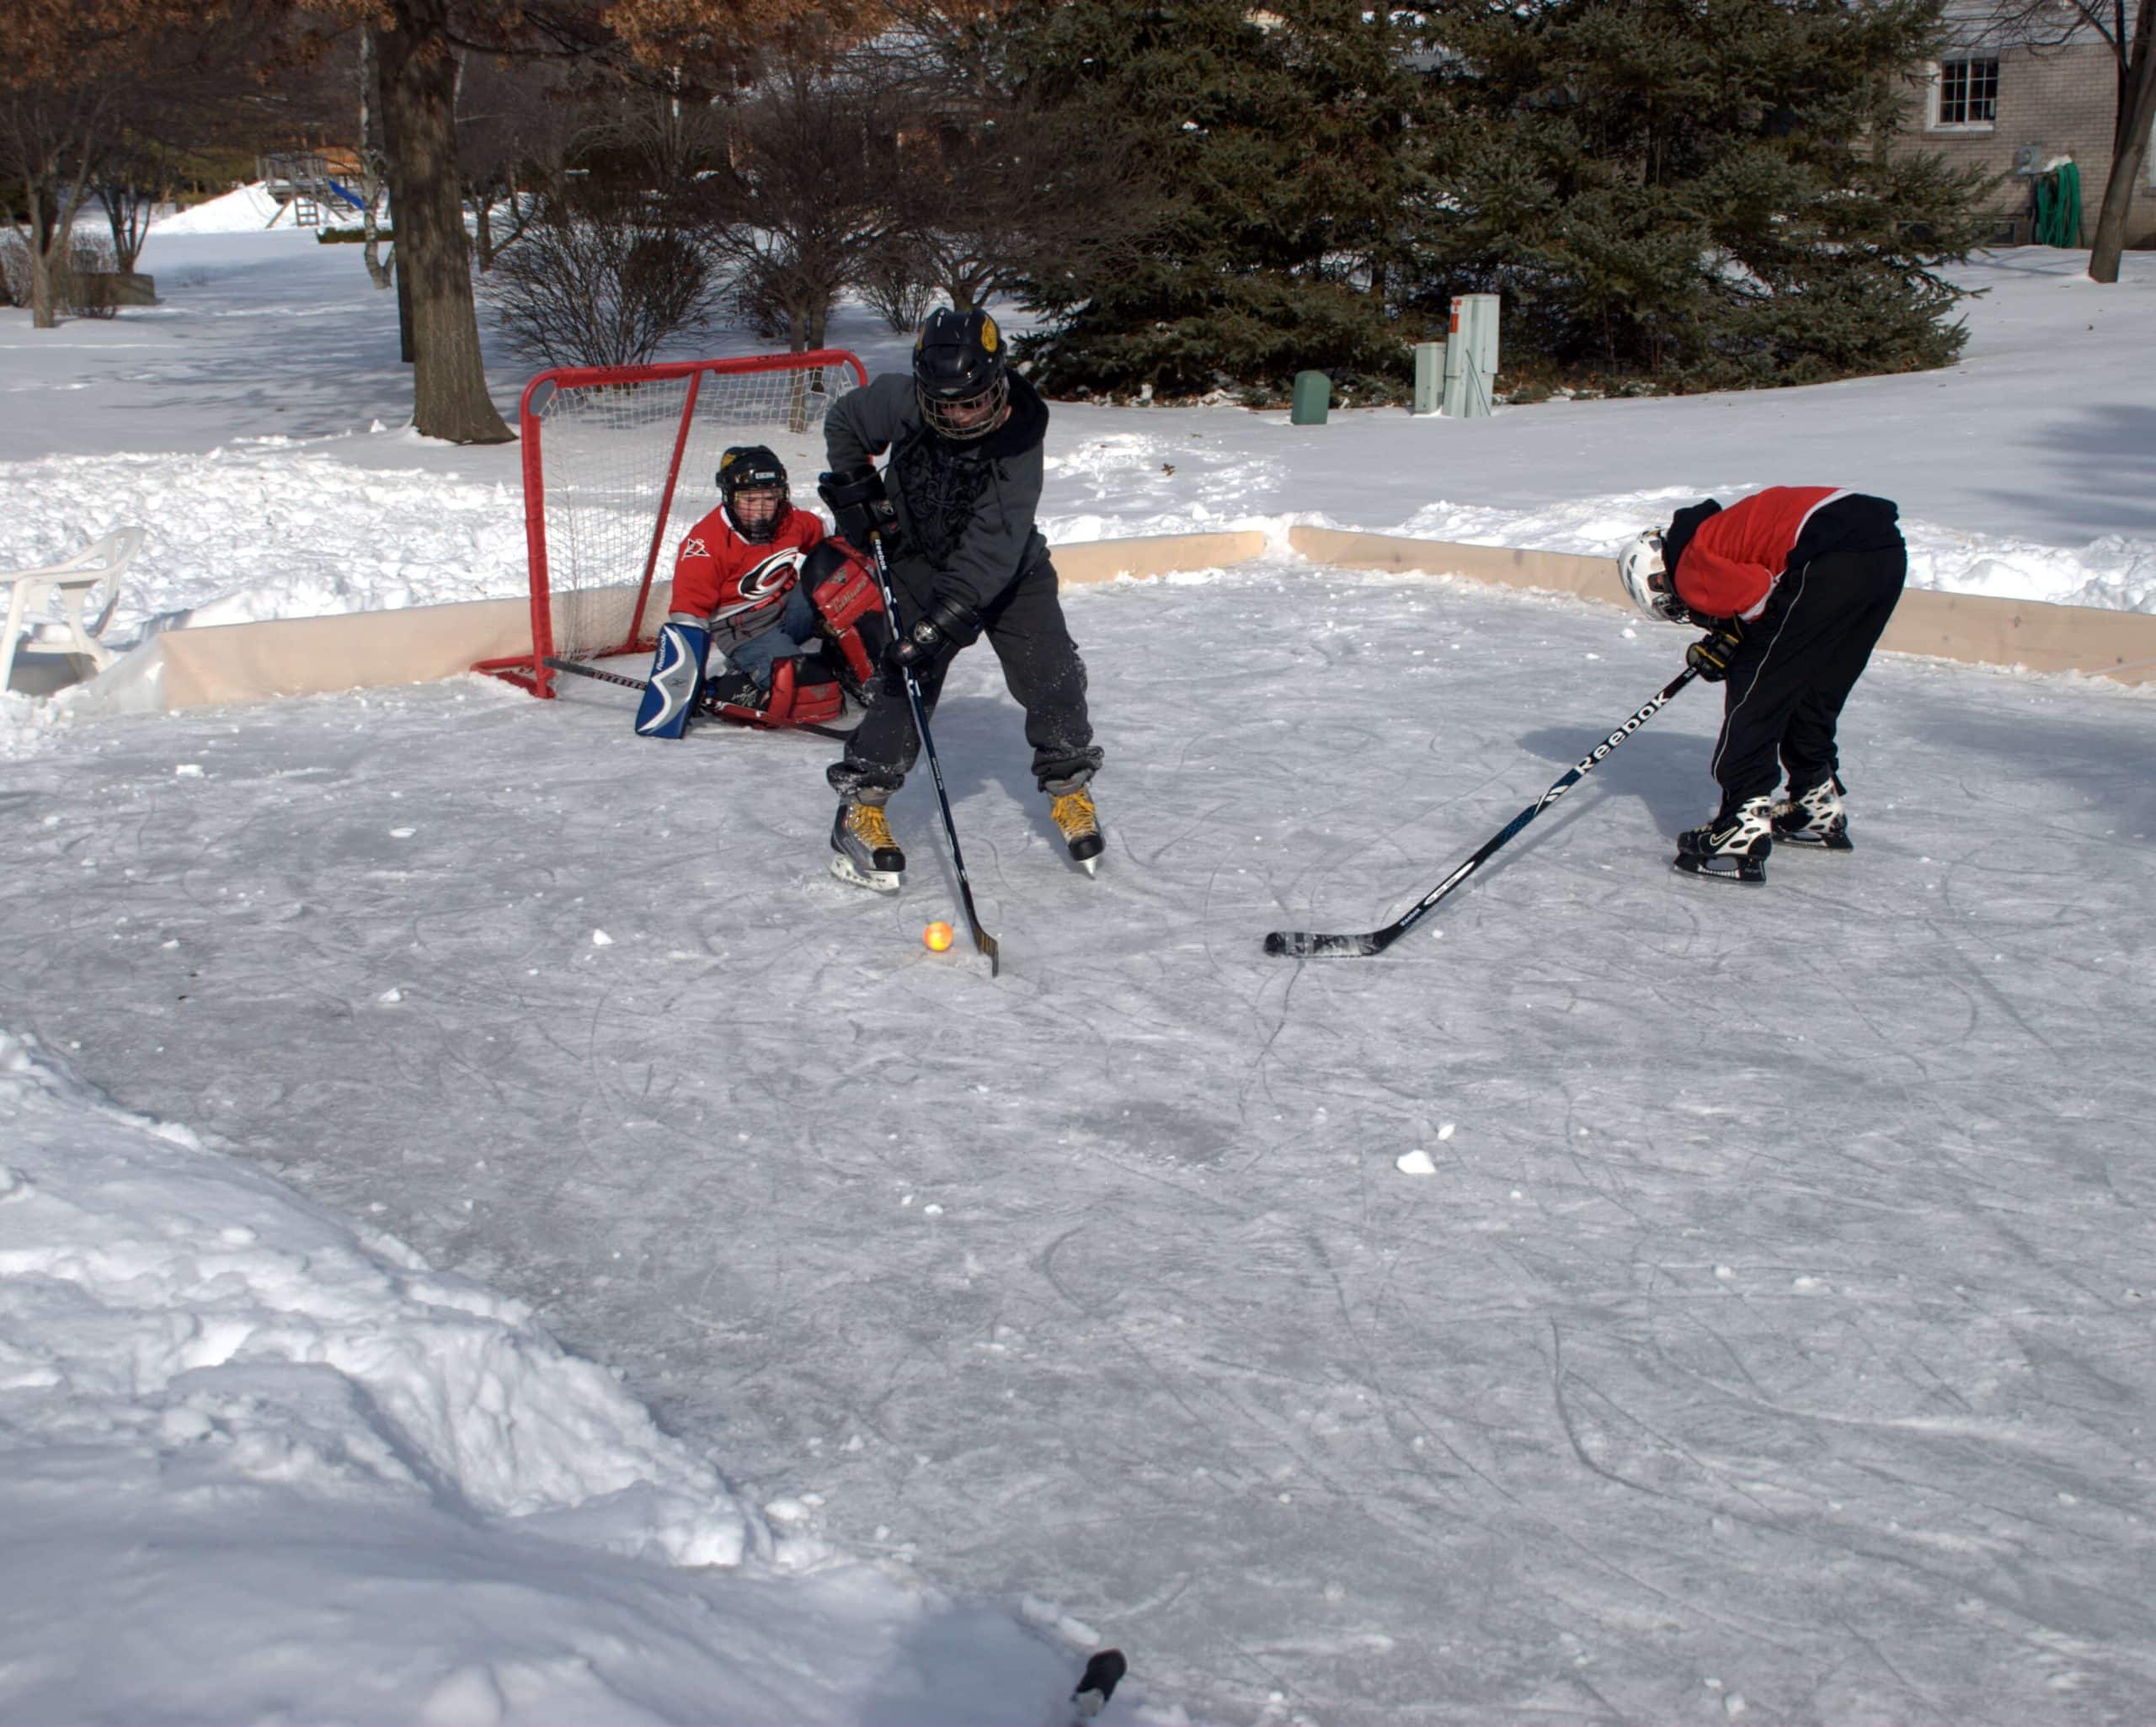 Hockey match on a DIY backyard ice rink